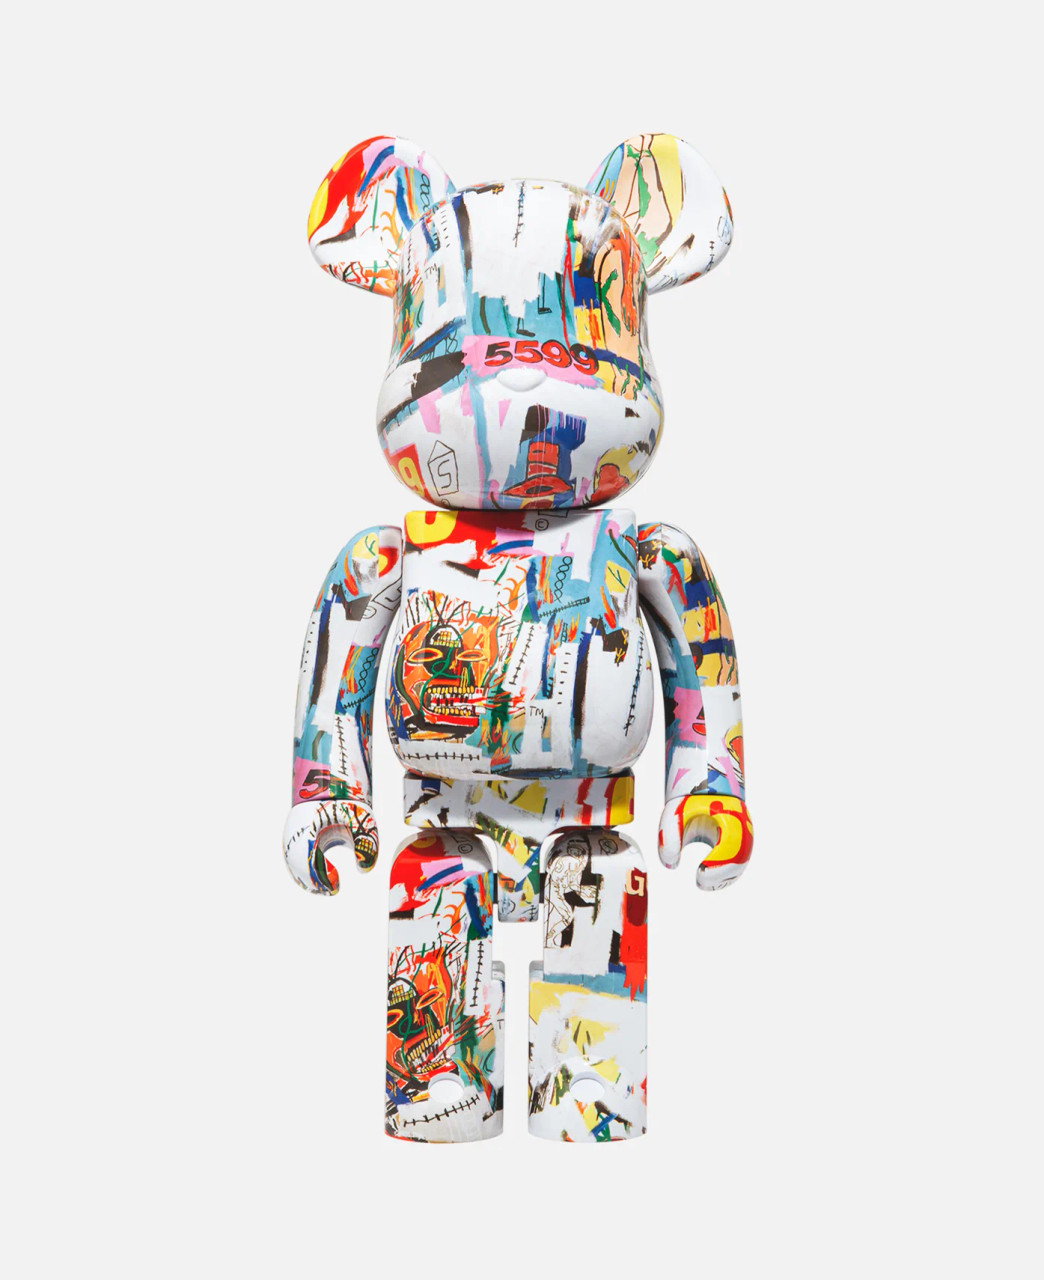 Medicom Toy Be@rbrick Andy Warhol x Jean-michel Basquiat #4 1000